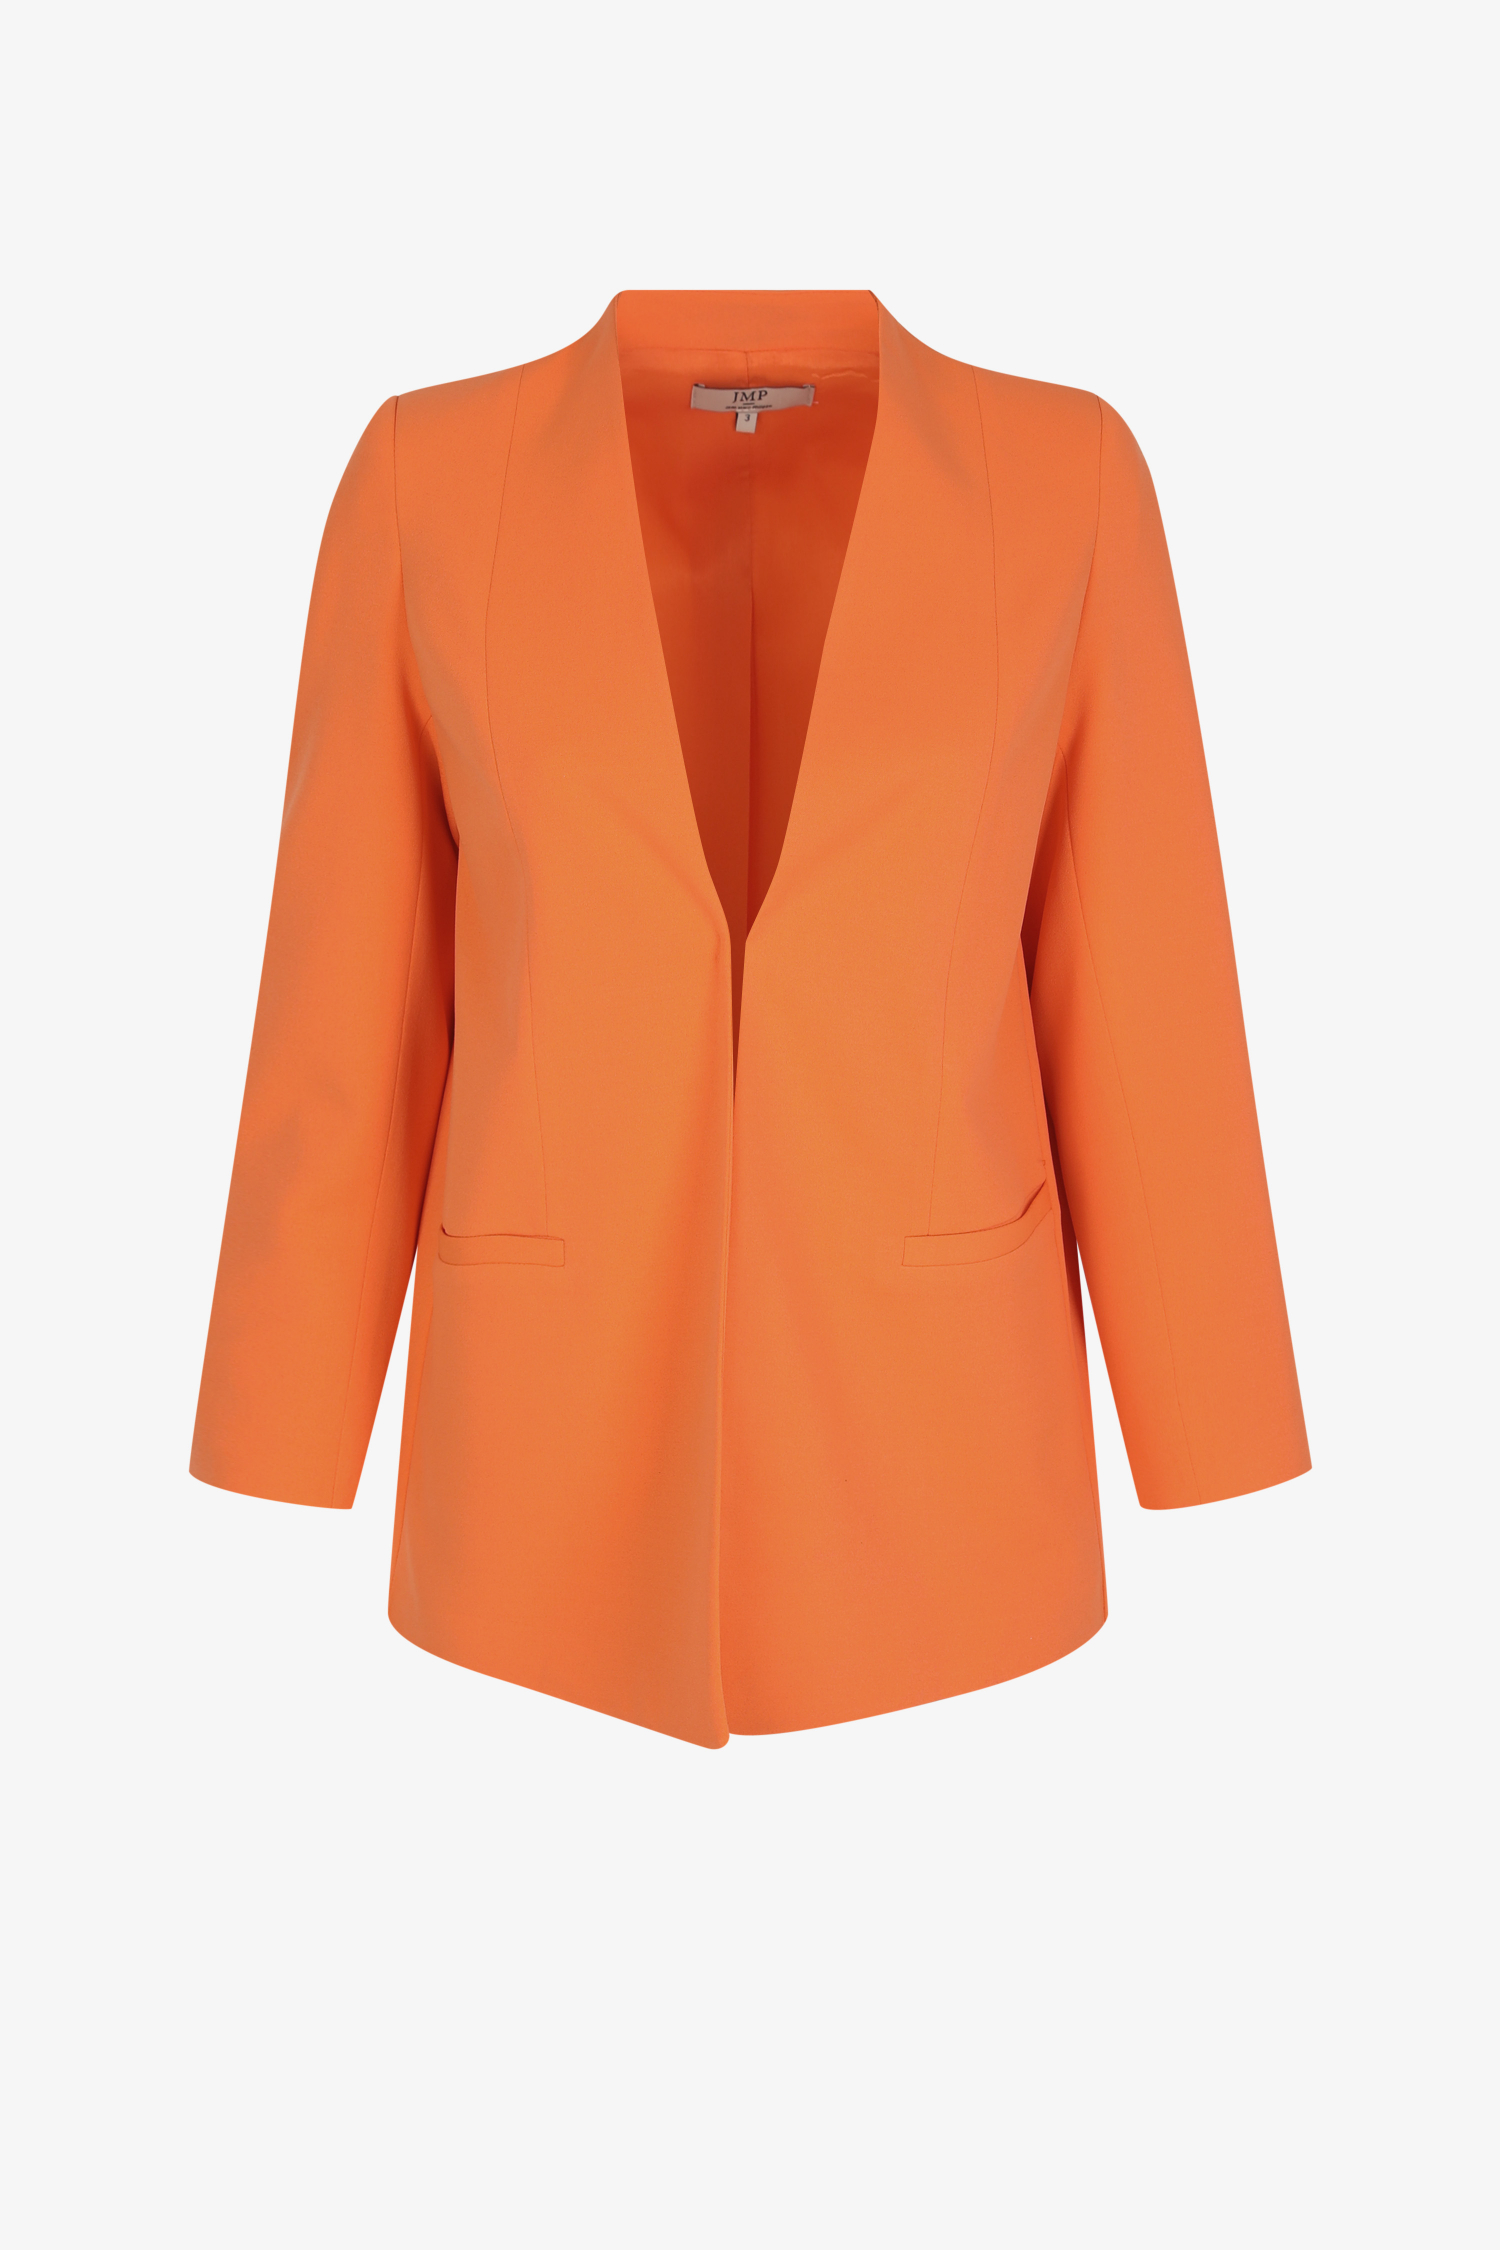 Collarless plain suit jacket